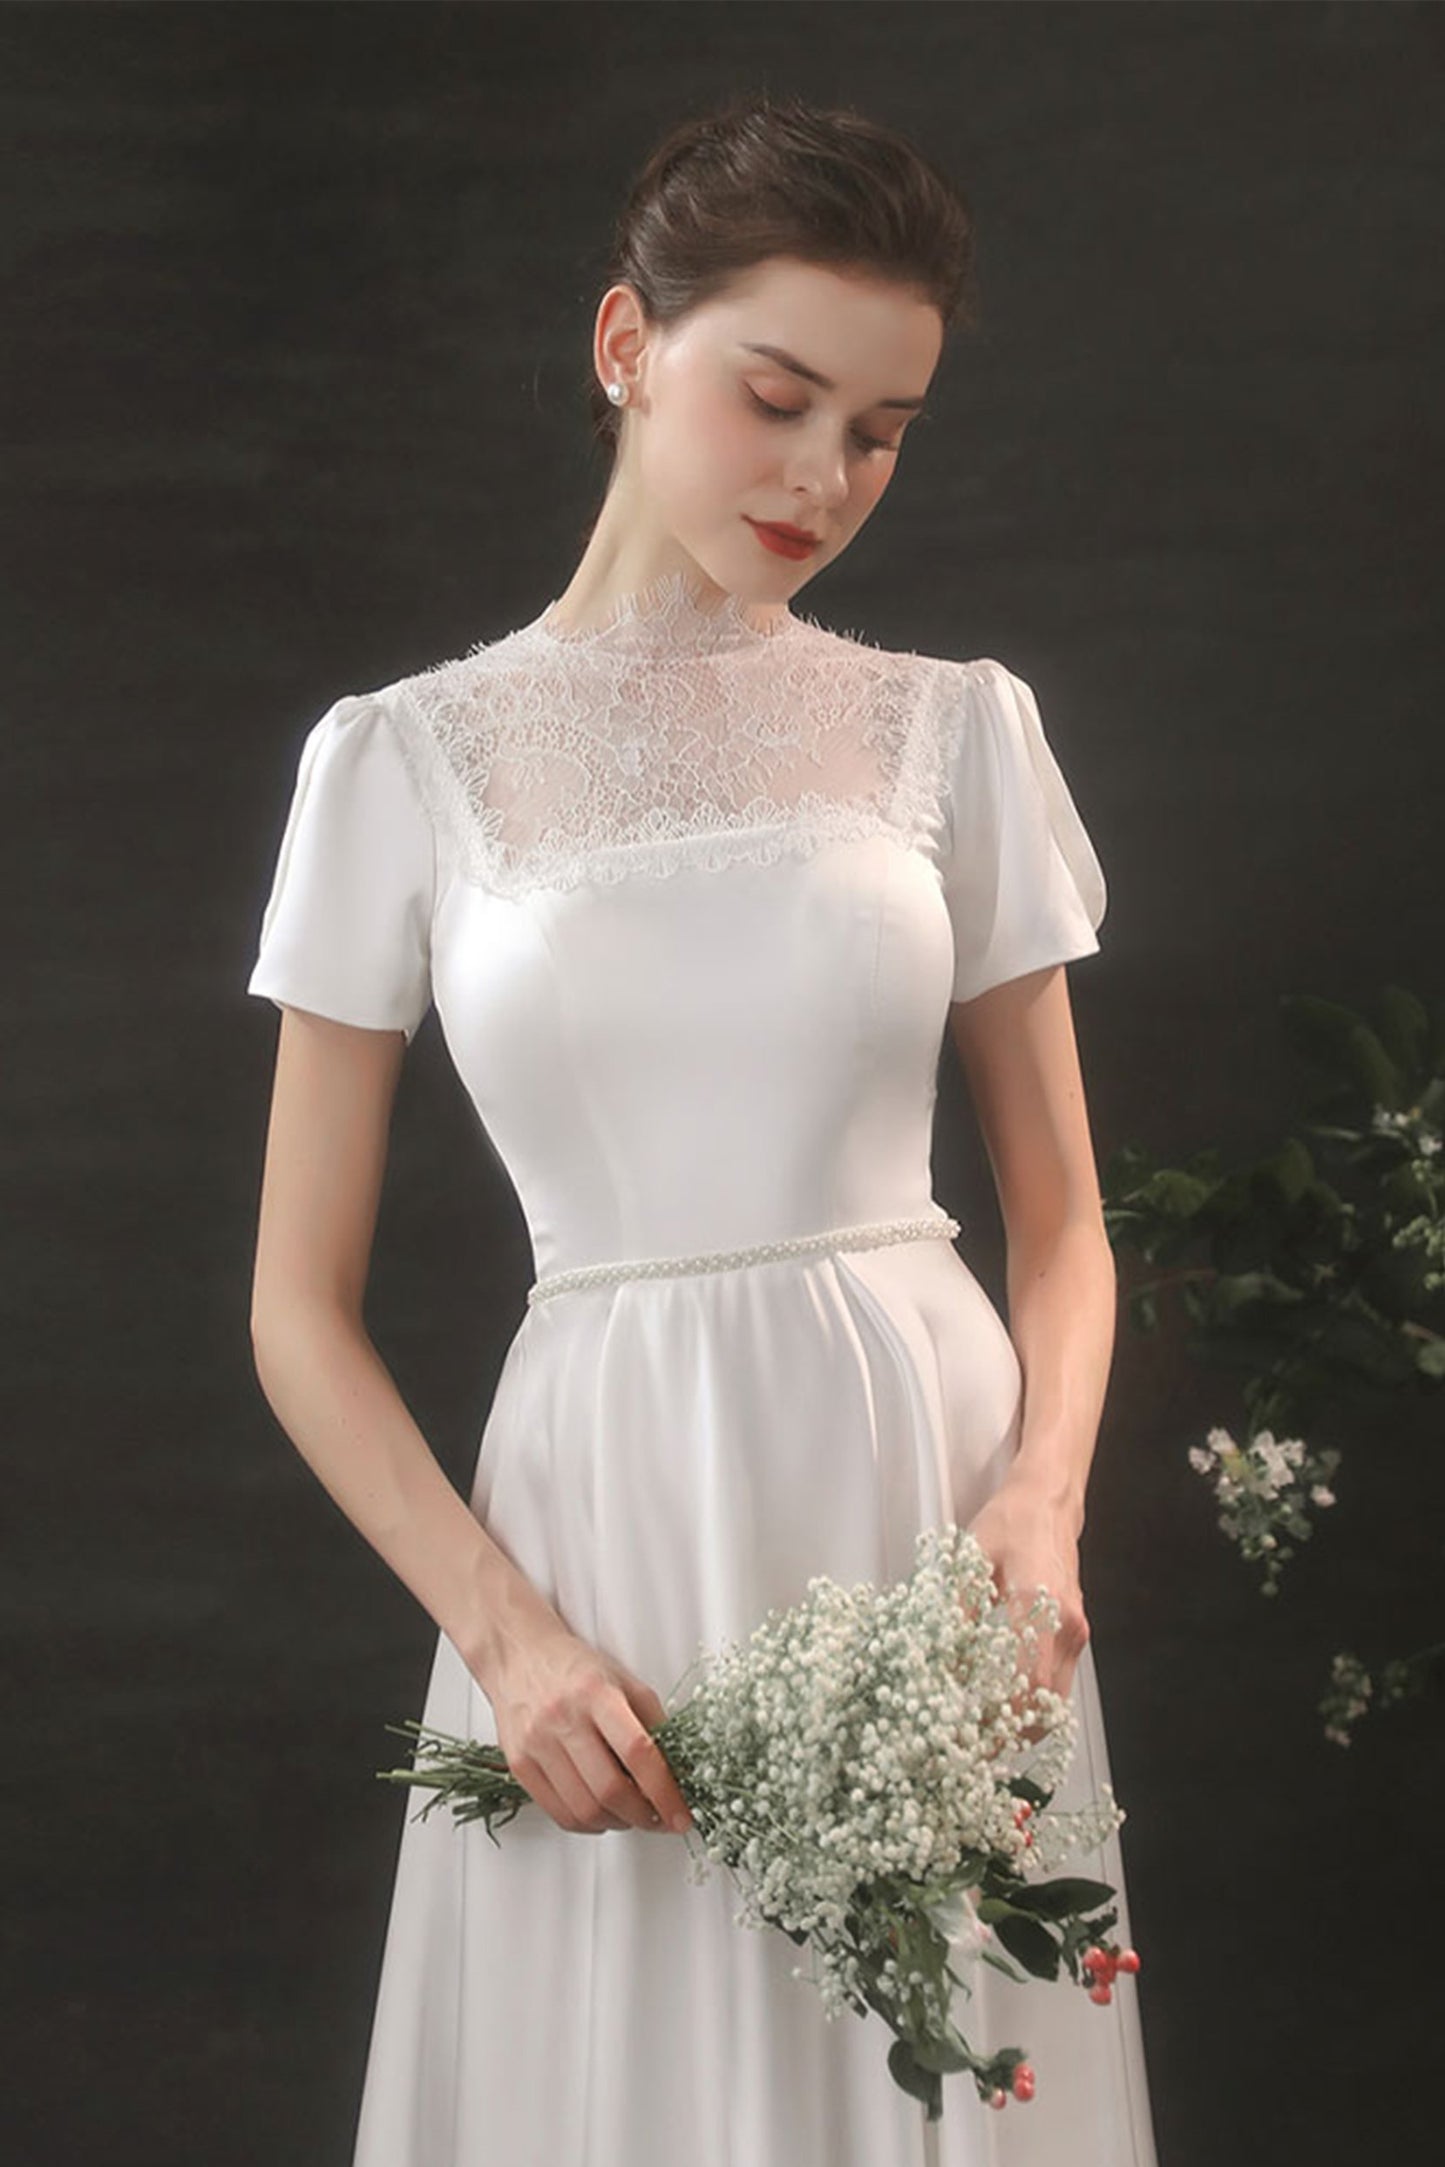 Sheath-Column Floor Length Satin Wedding Dress CW2692